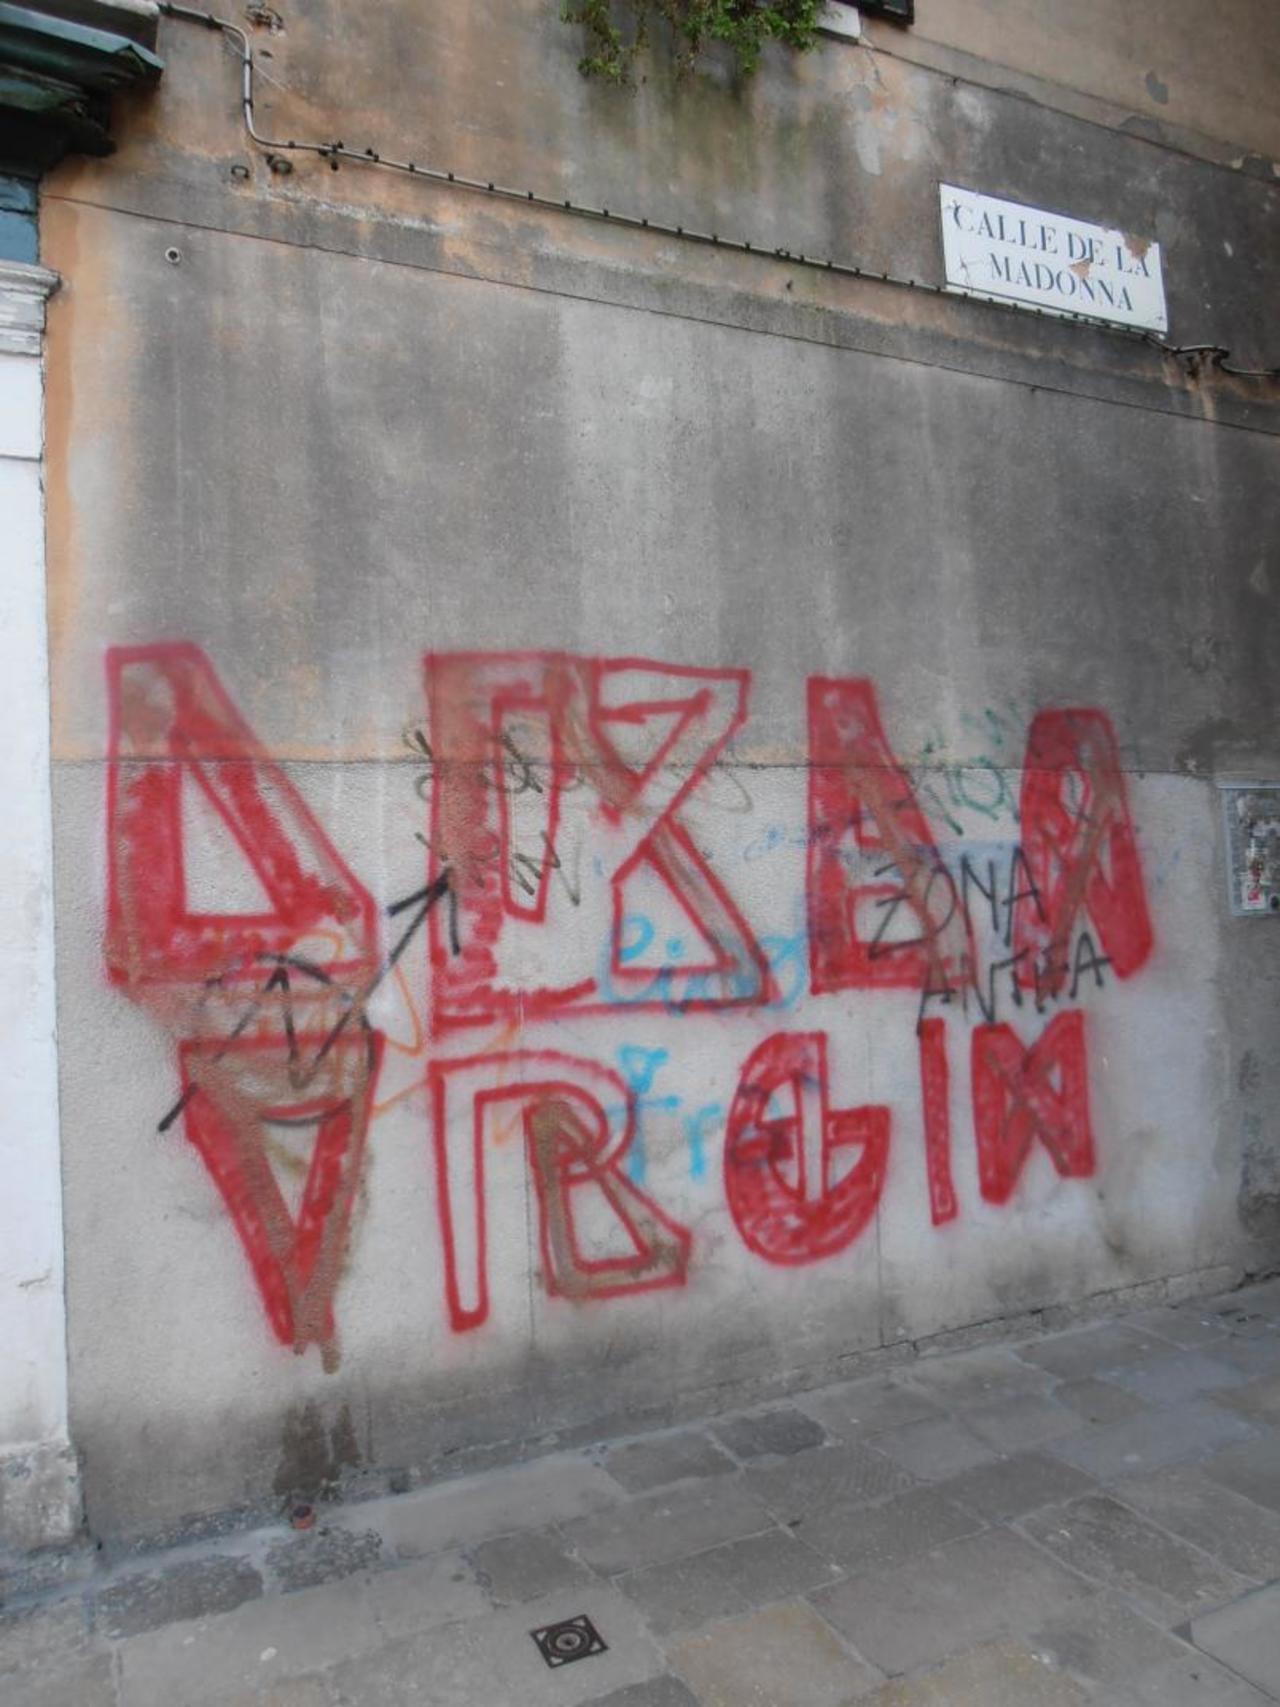 #graffiti #streetart #veniceitaly https://t.co/5haQ2BY80Q